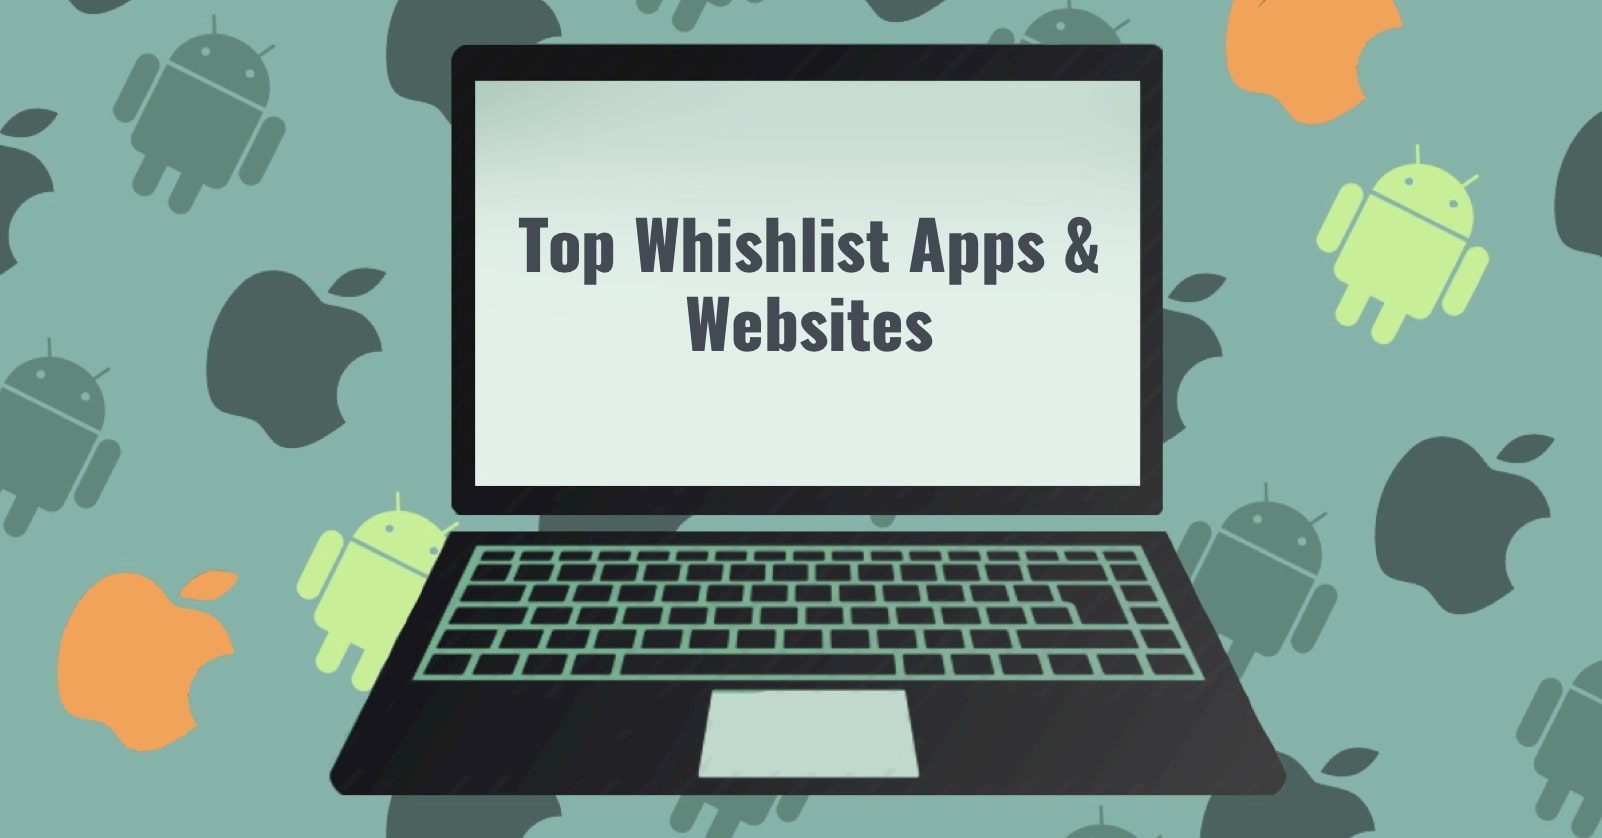 Top 10 Whishlist Apps & Websites